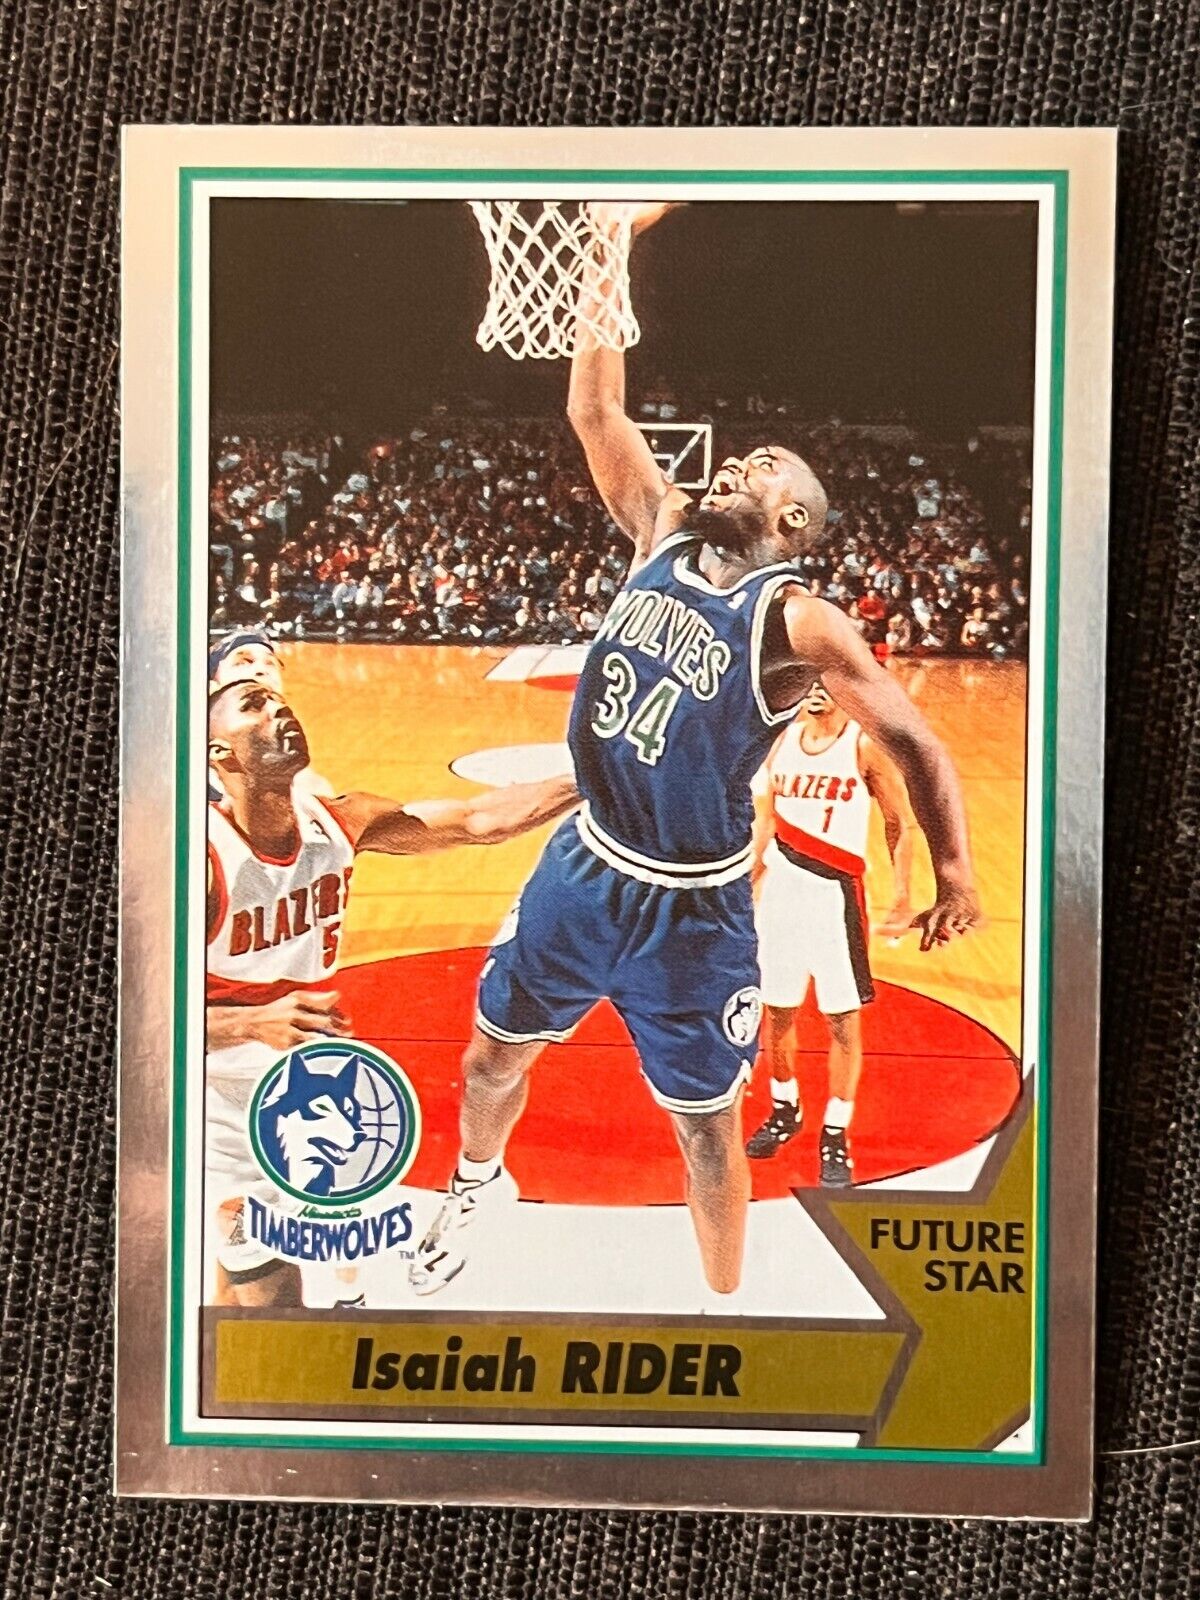 PANINI ISAIAH RIDER THIMBERWOLVES STICKER # 169 BASKETBALL NBA 94-95 FUTURE STAR